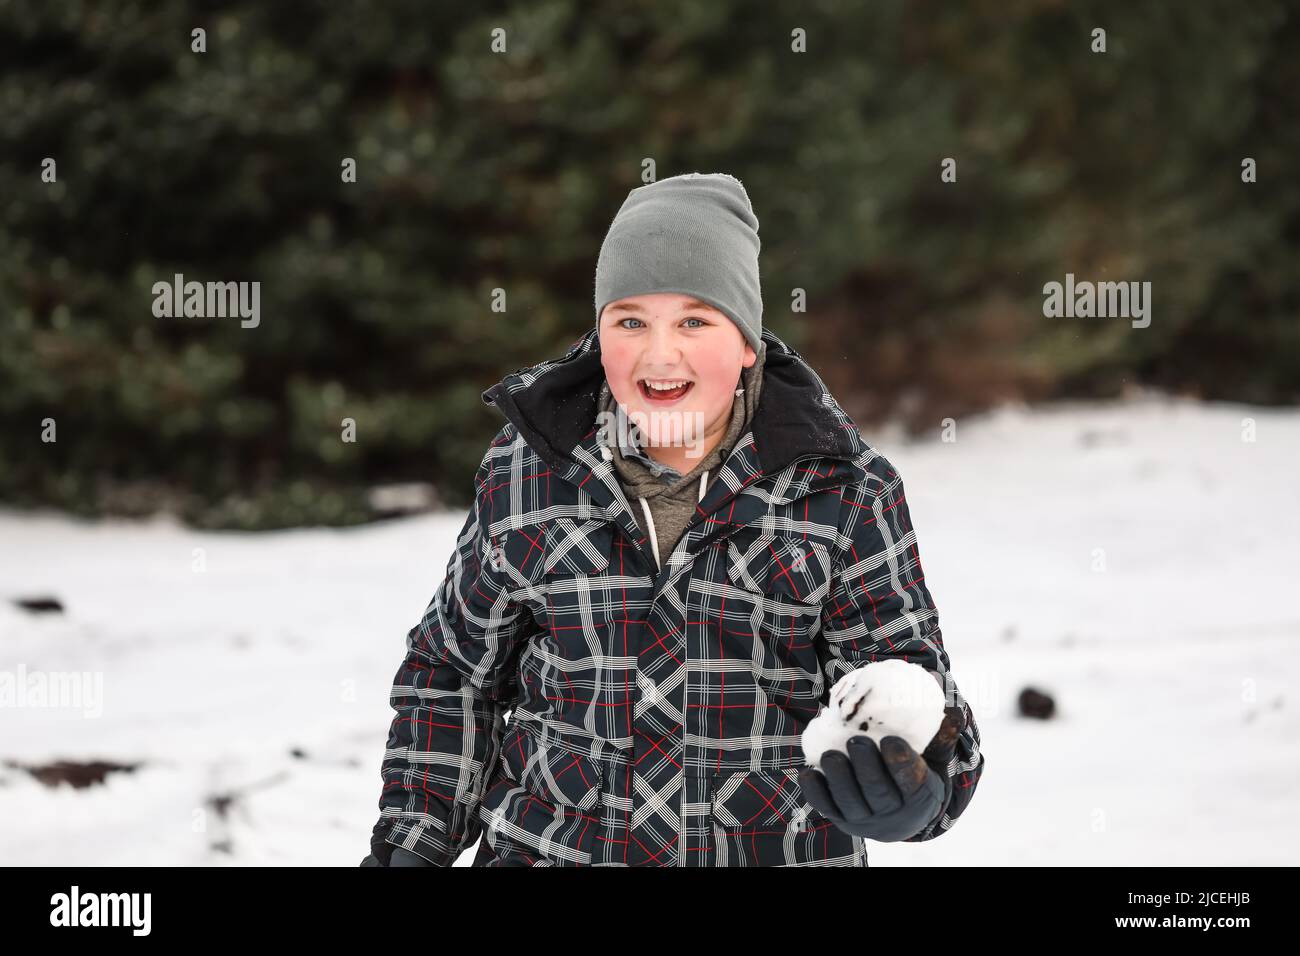 Happy boy playing in snowy winter wonderland snowball fight Stock Photo